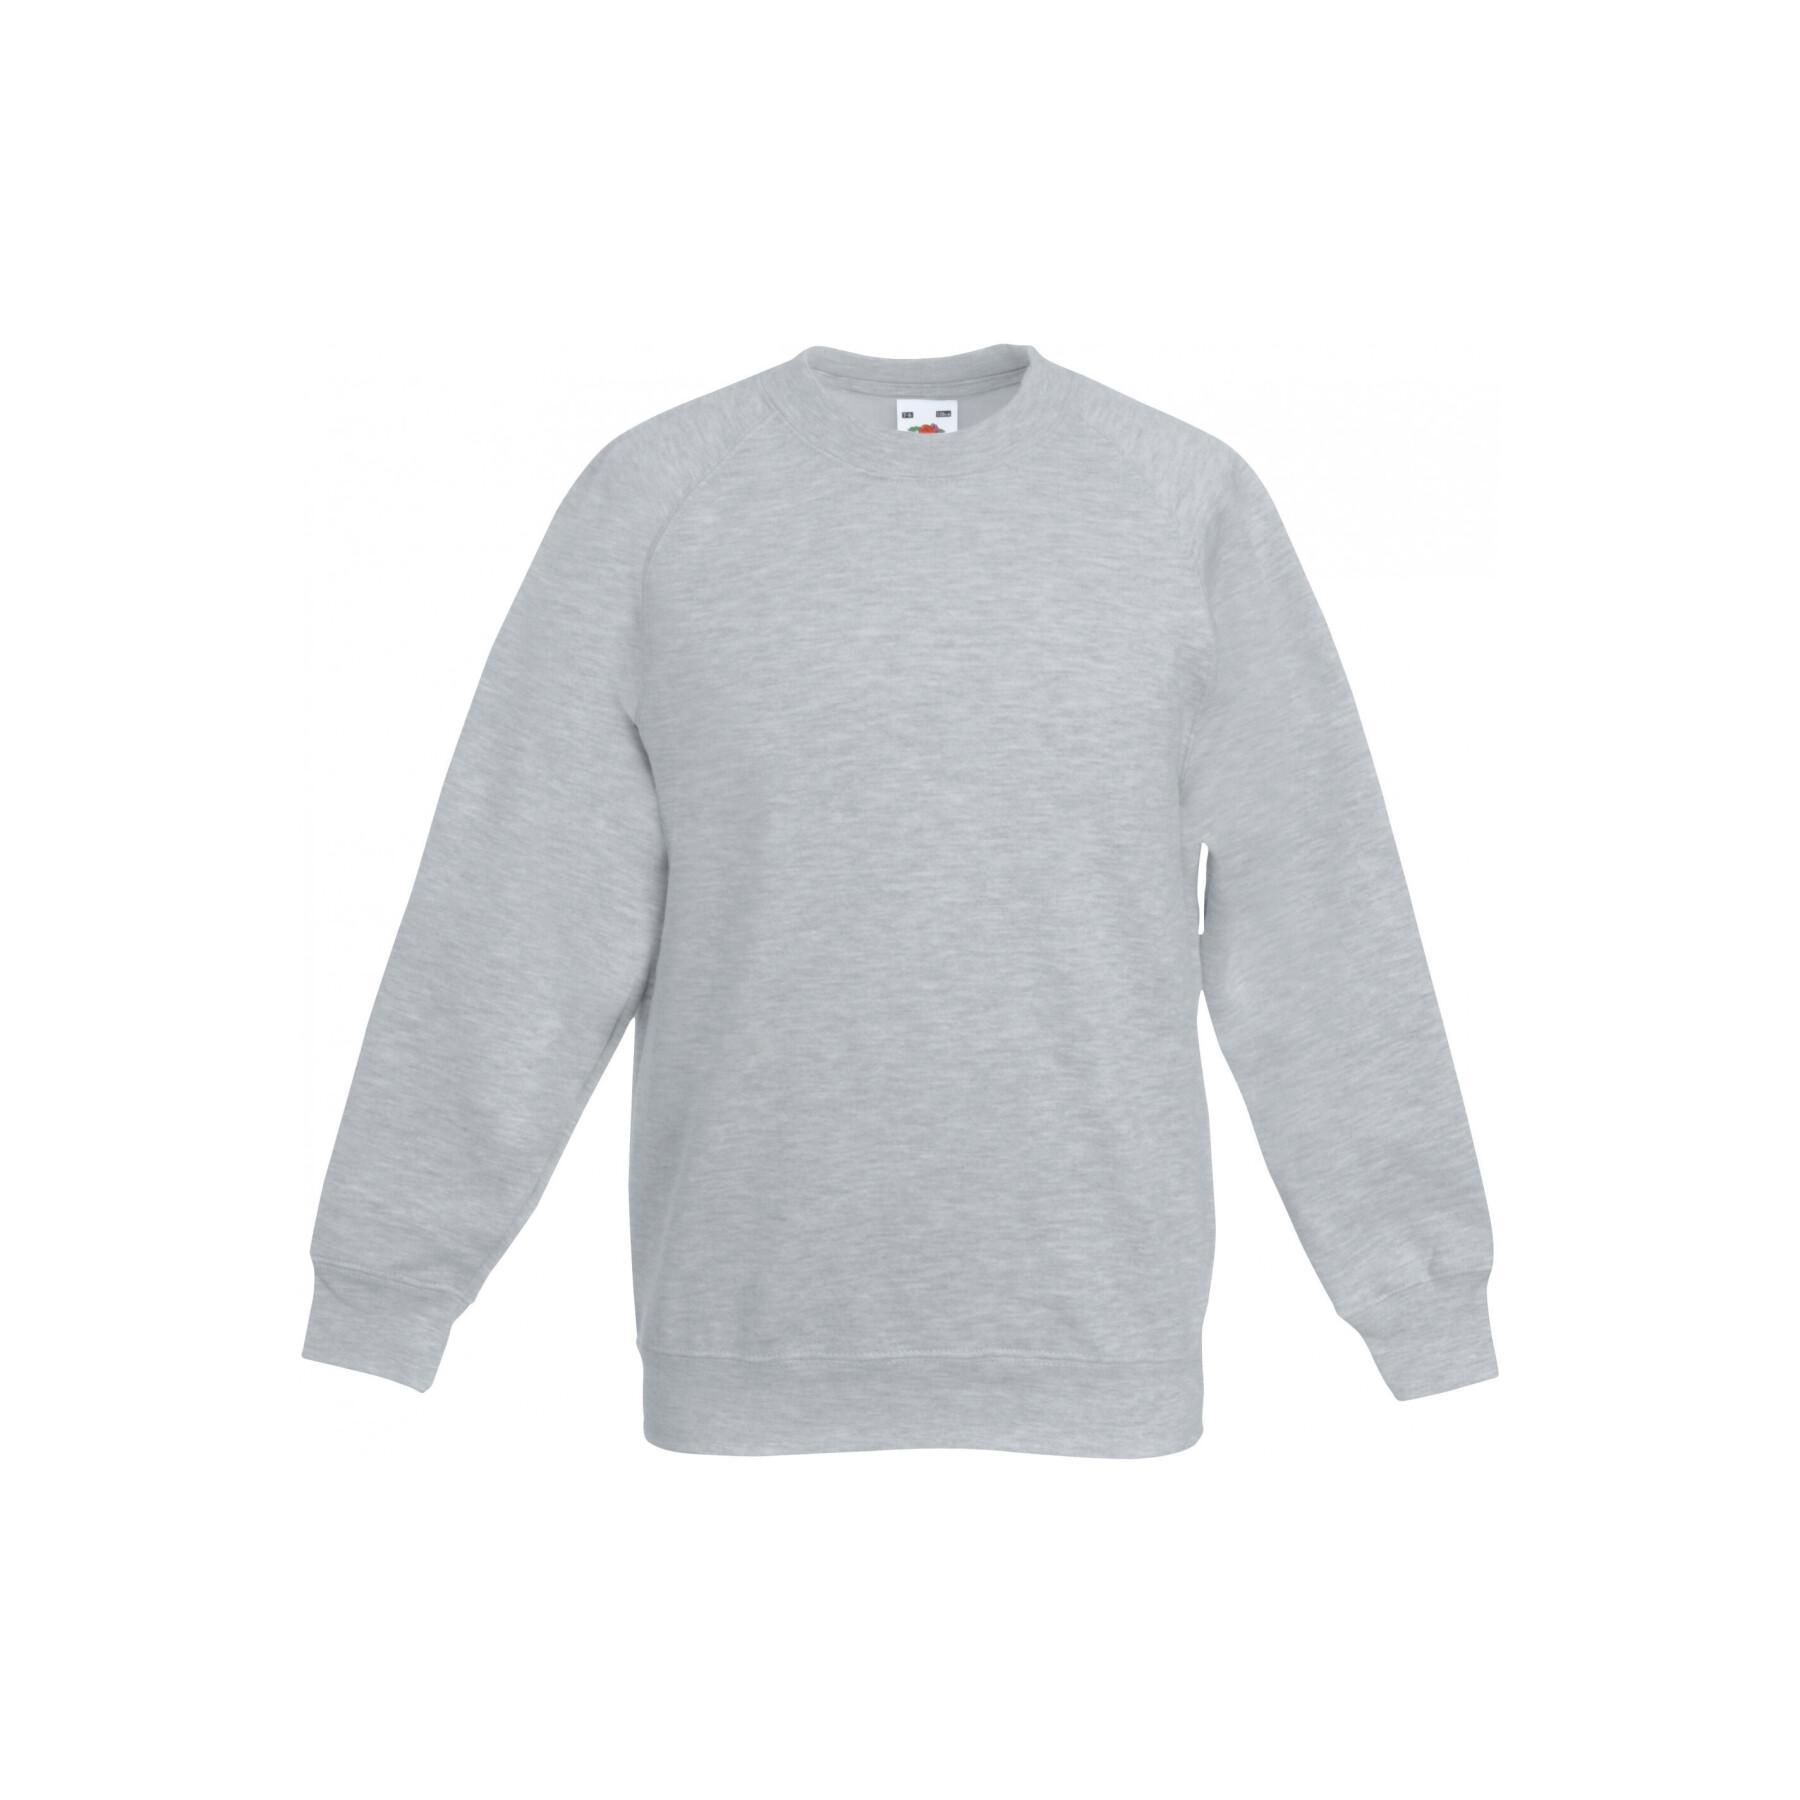 Sweatshirt raglan sleeves criança Fruit of the Loom 62-039-0